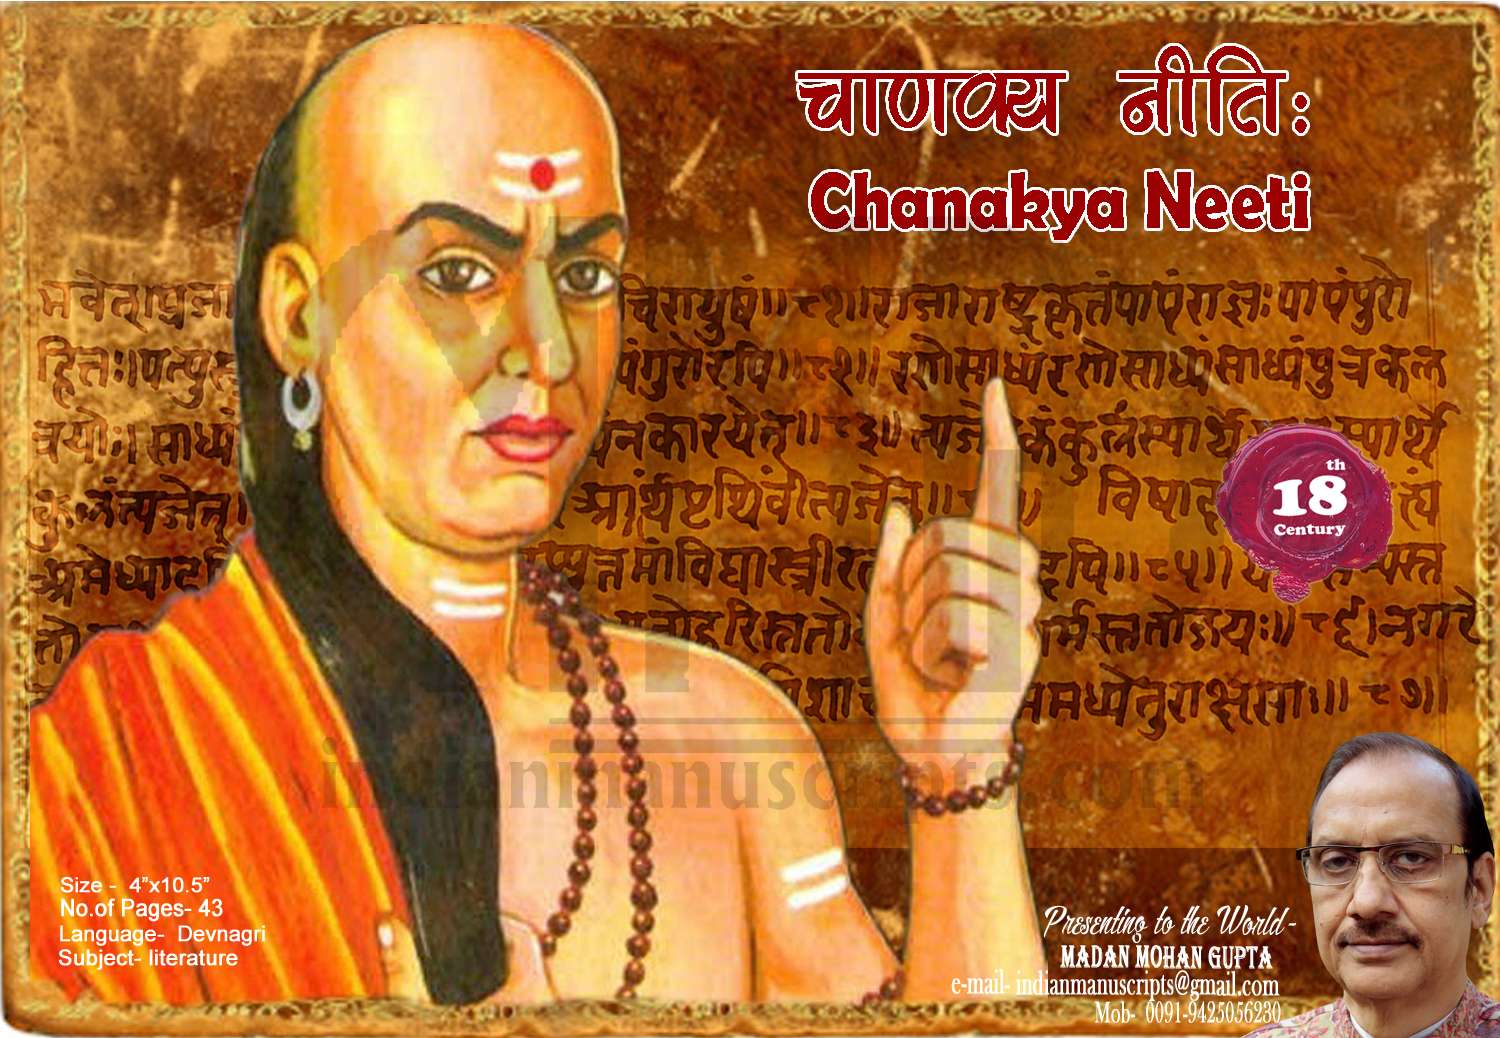 Chankya Neeti